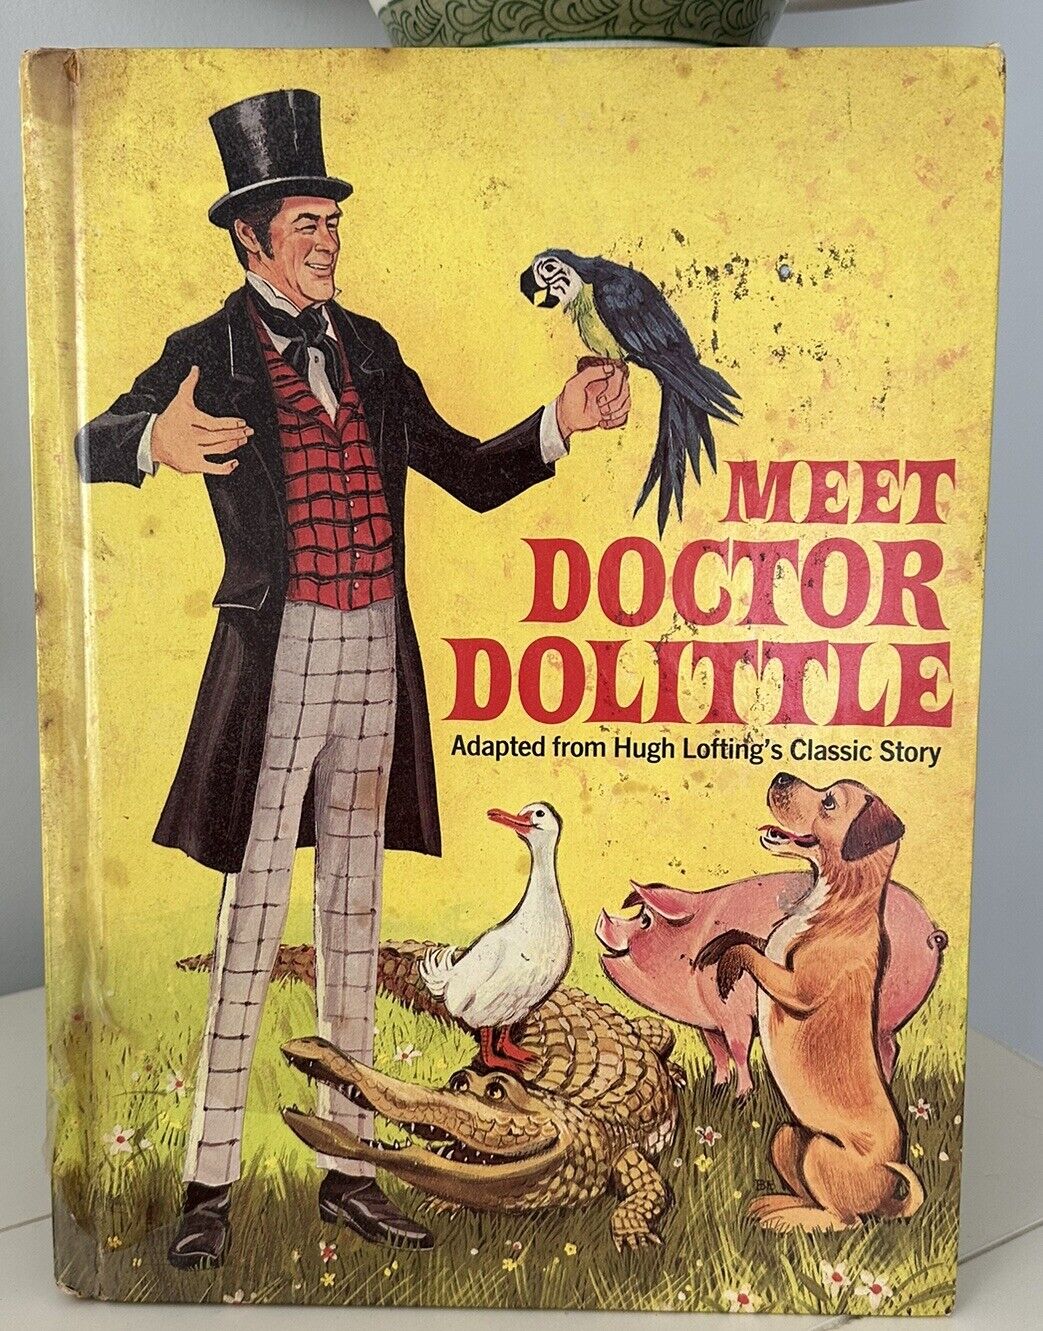 Vintage Meet Doctor Dolittle book adapted by Al Perkins - 1967 